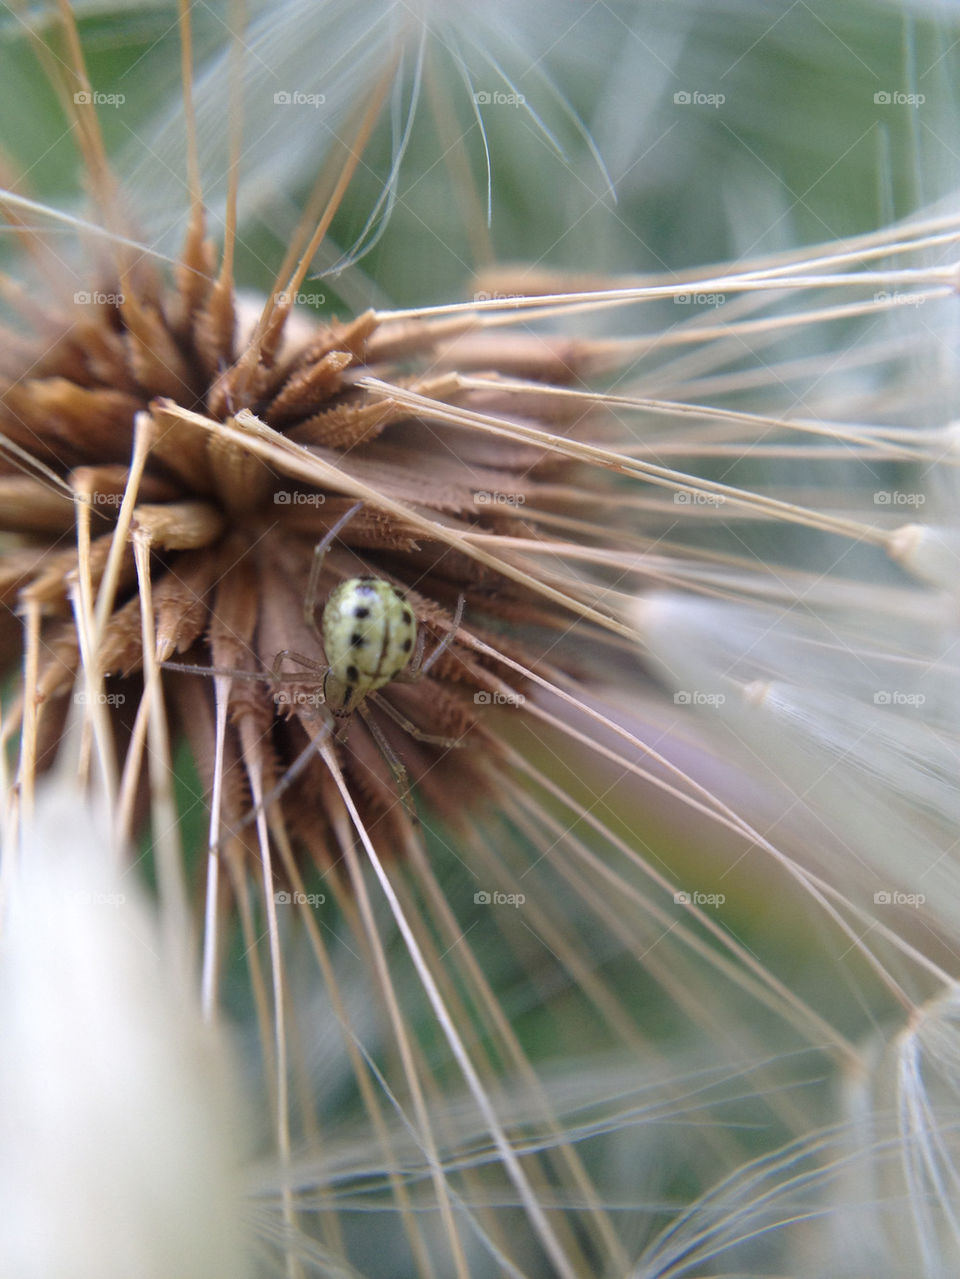 Spider on a dandelion- iPhone macro shot